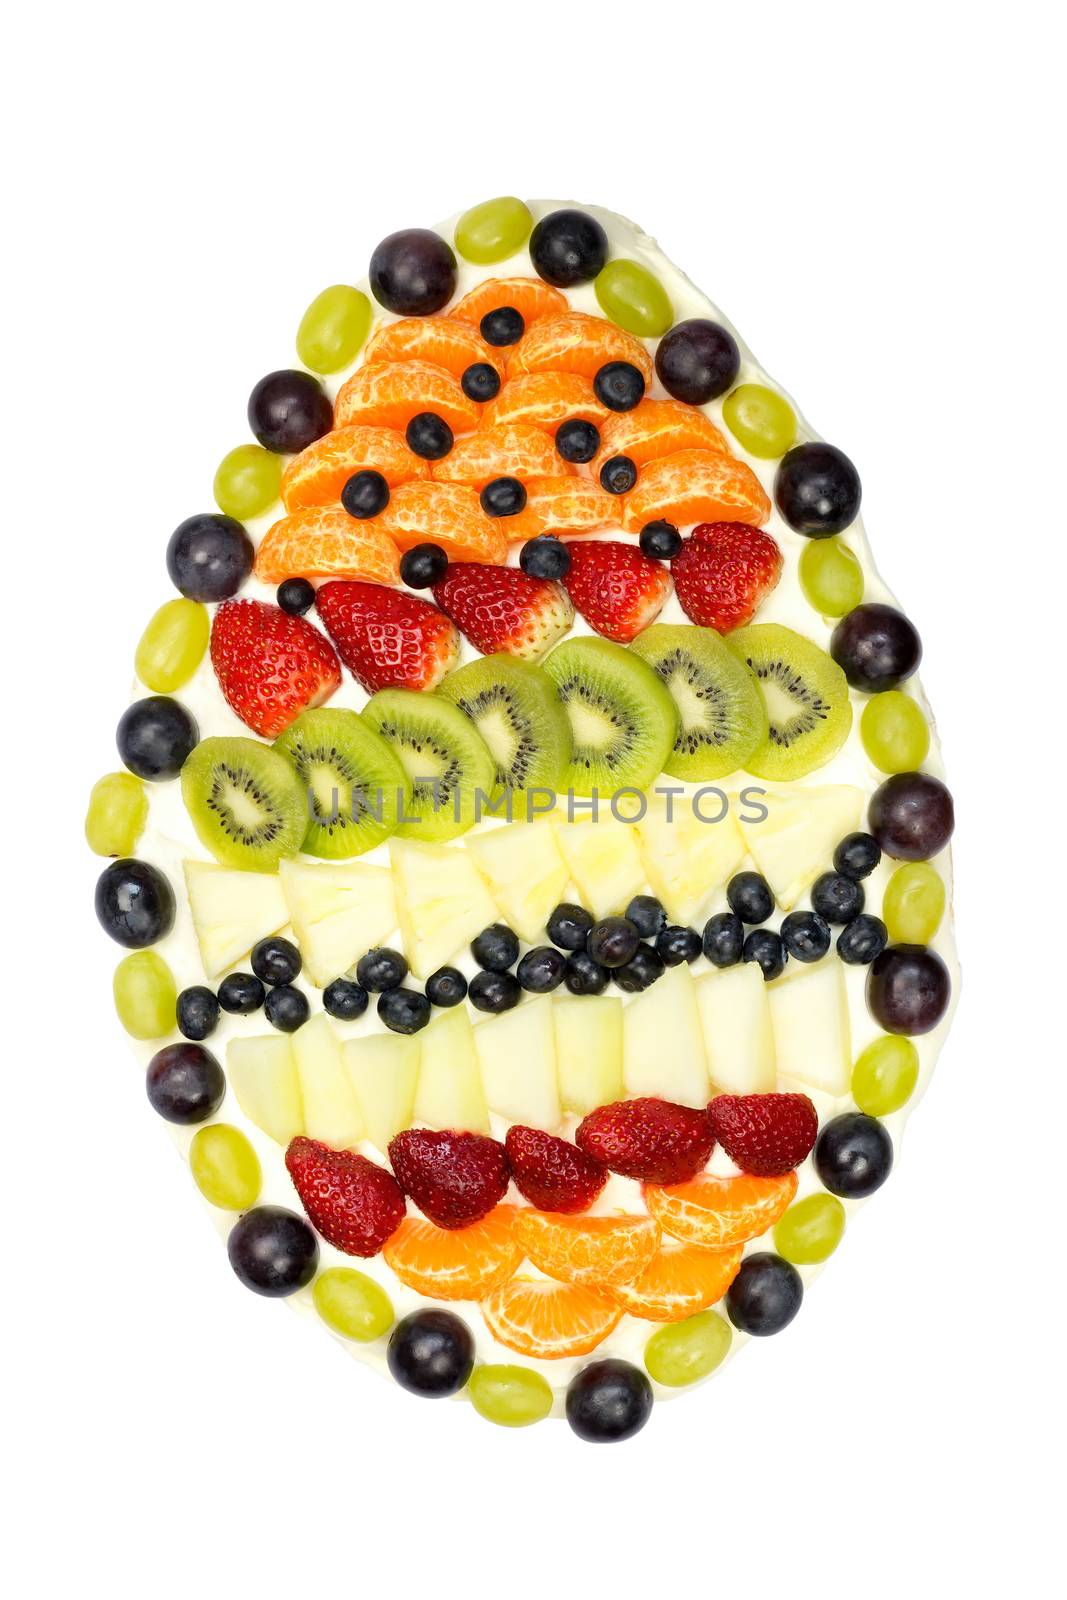 Egg shaped fruit cake covered with various fruits isolated on white background